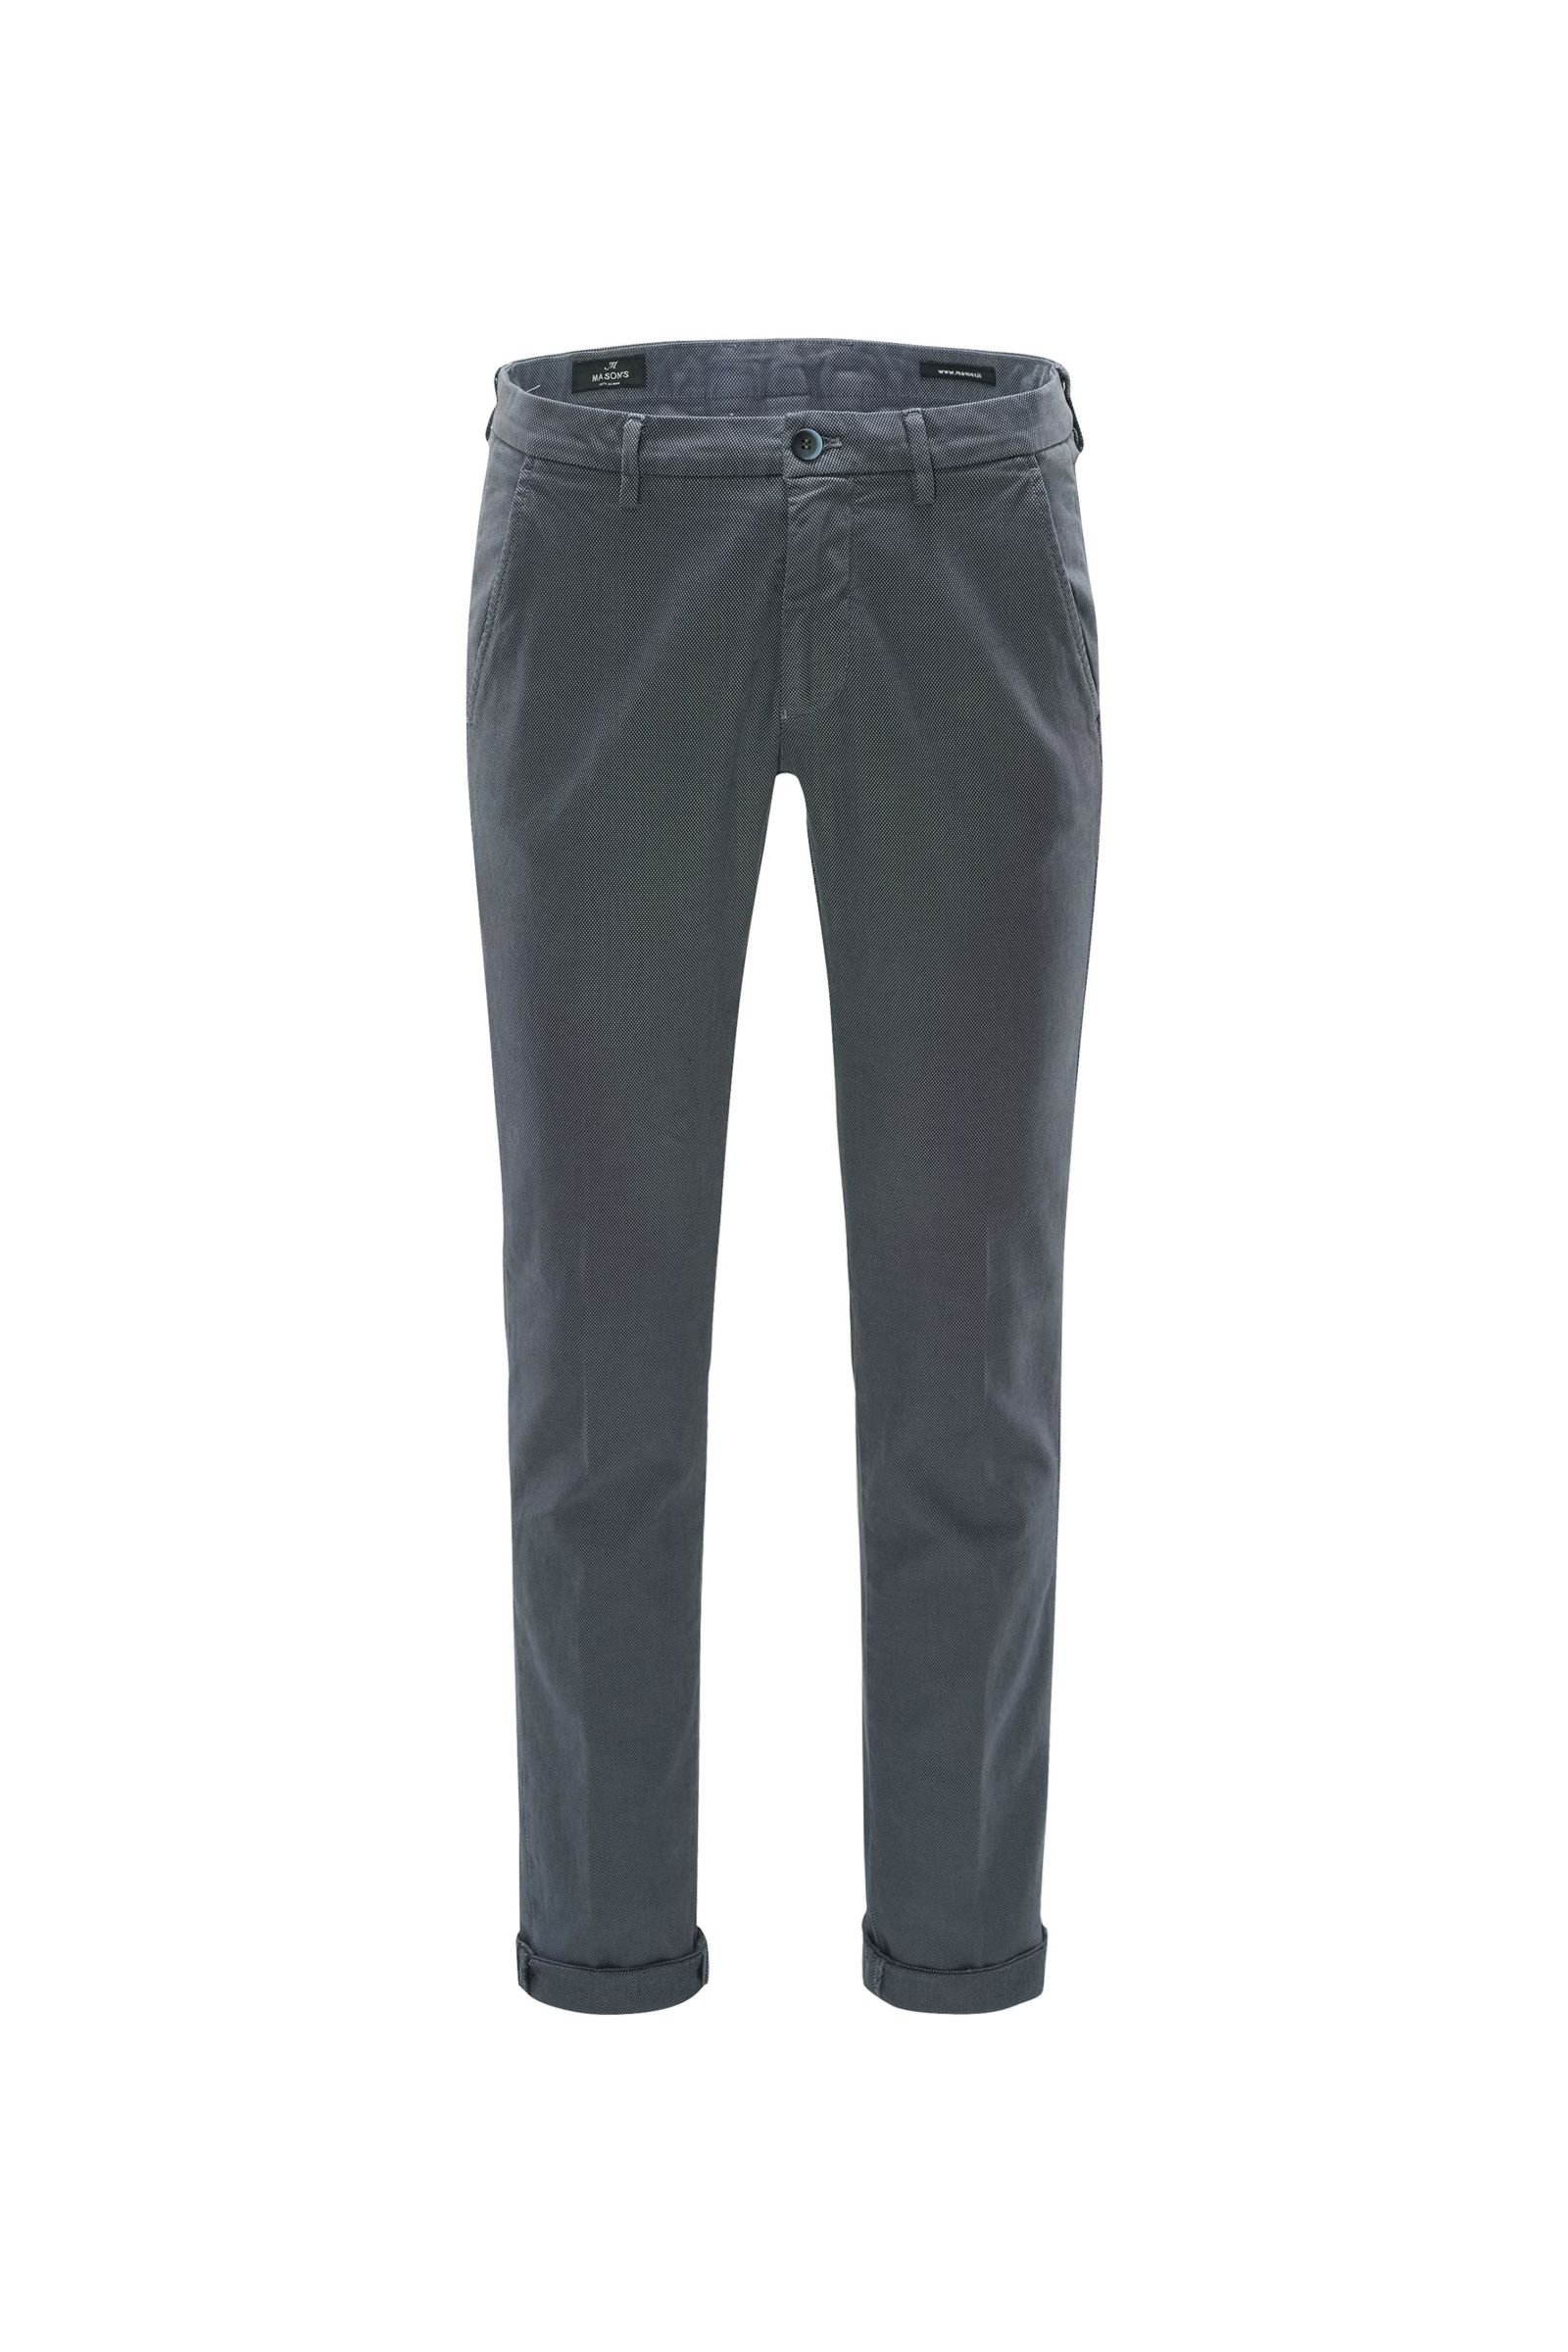 Cotton trousers 'Torino' grey-blue